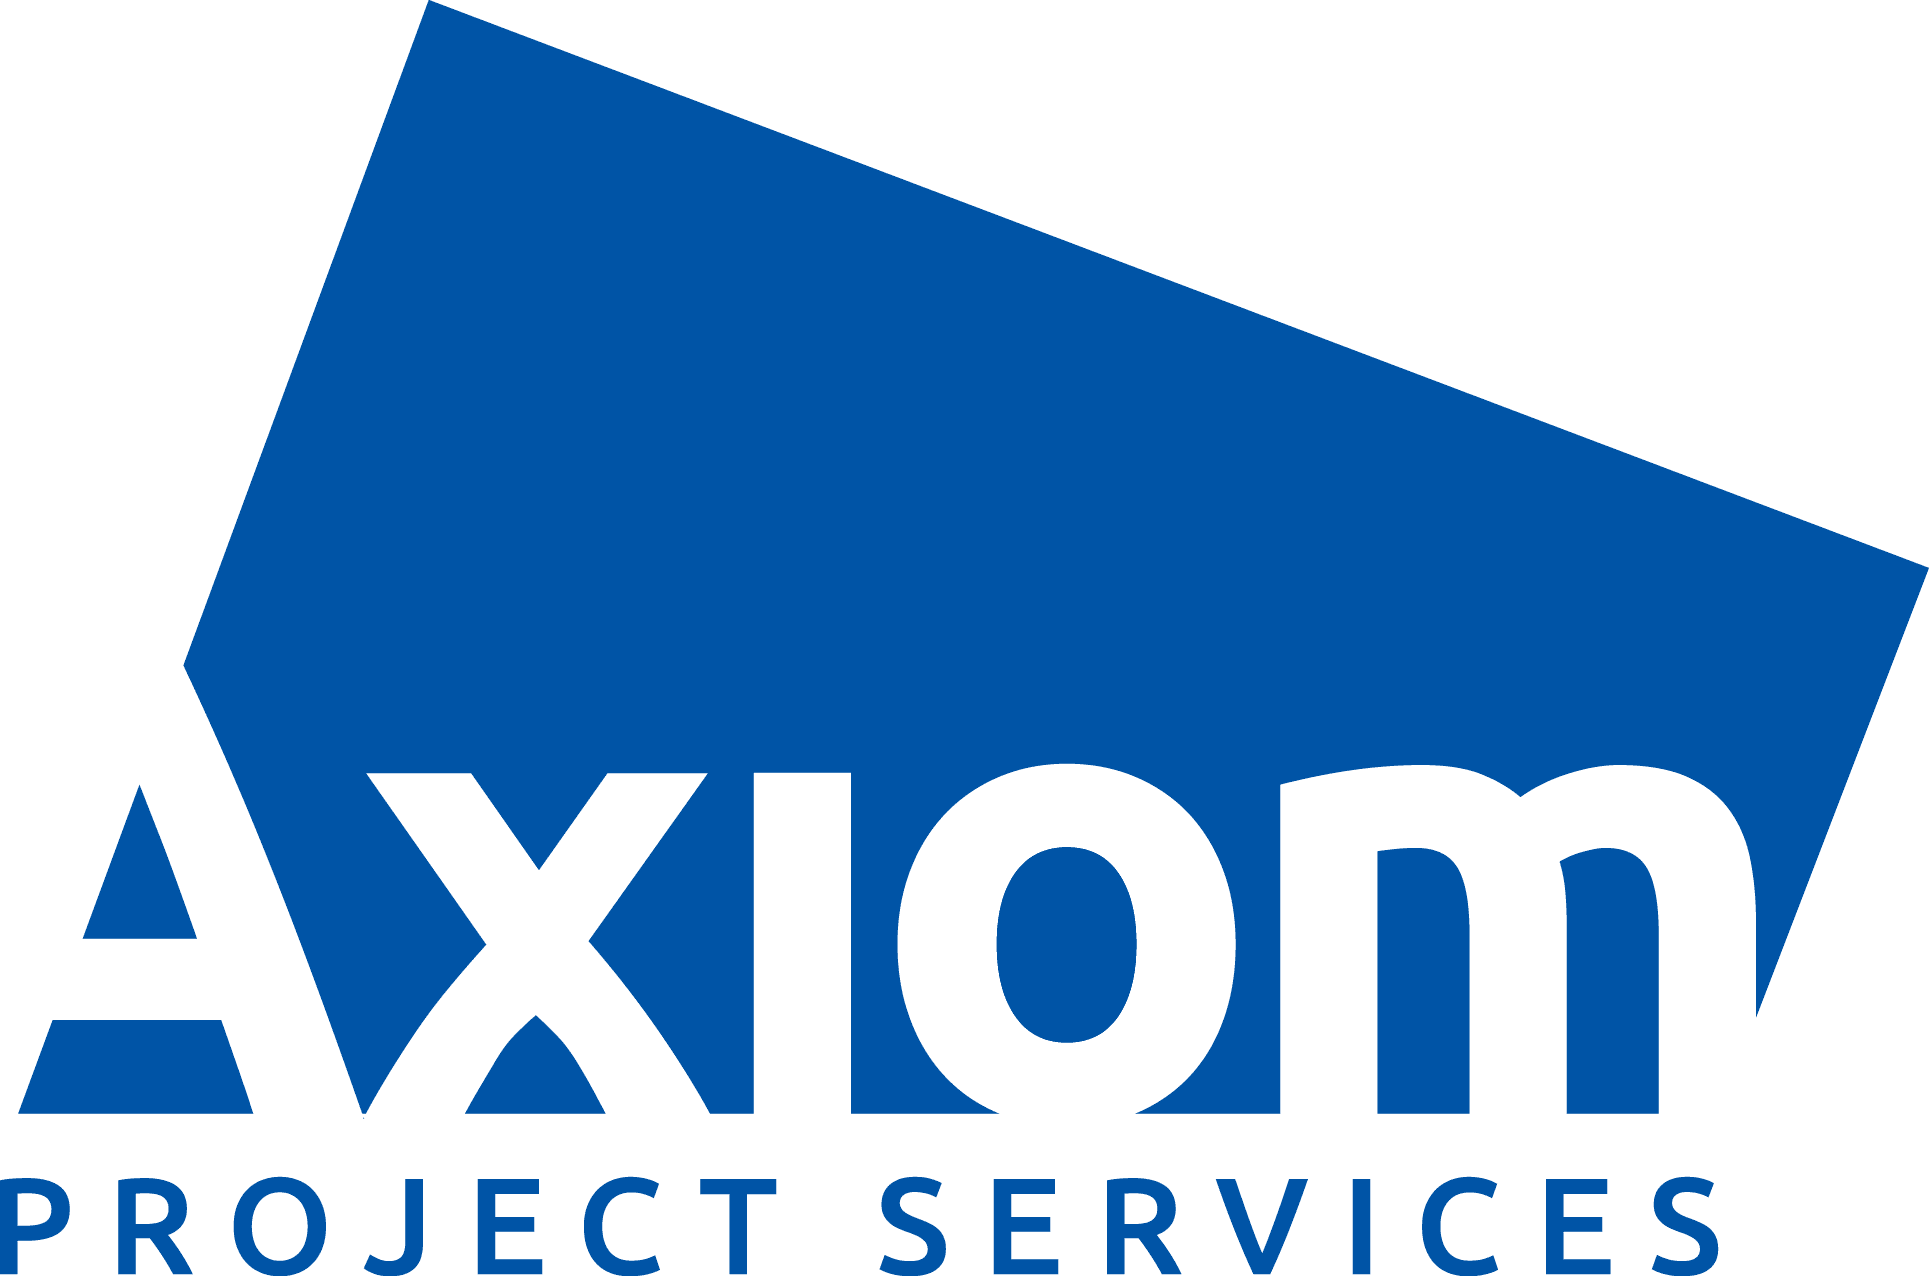 Axiom’s new brand